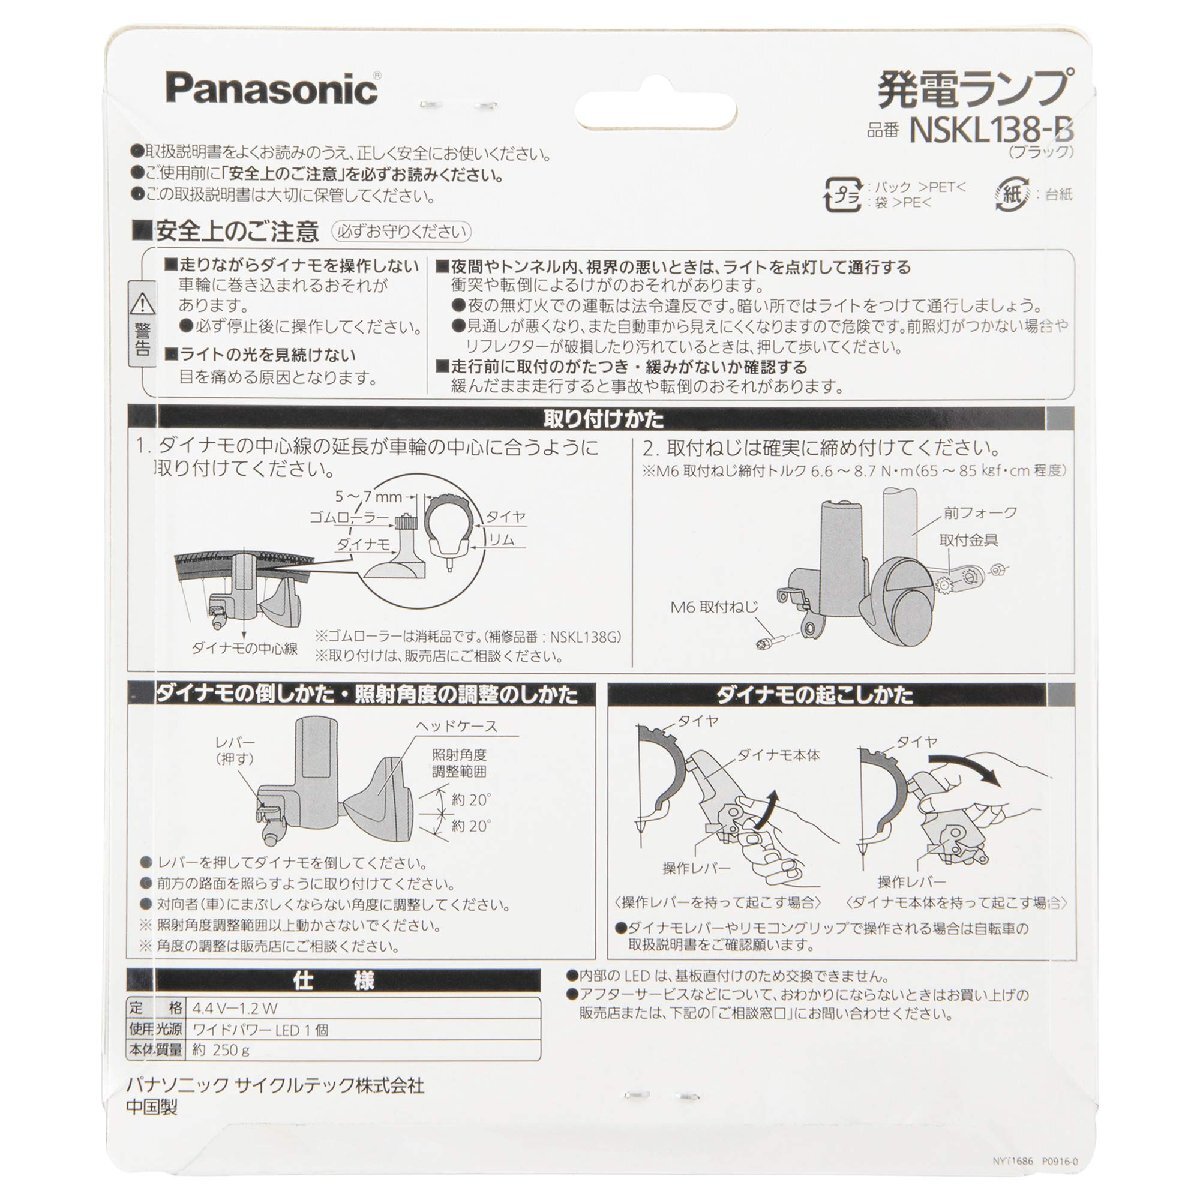  Panasonic (Panasonic) LED departure electro- lamp wide LED bicycle black W58×D128×H105mm NSKL138-B